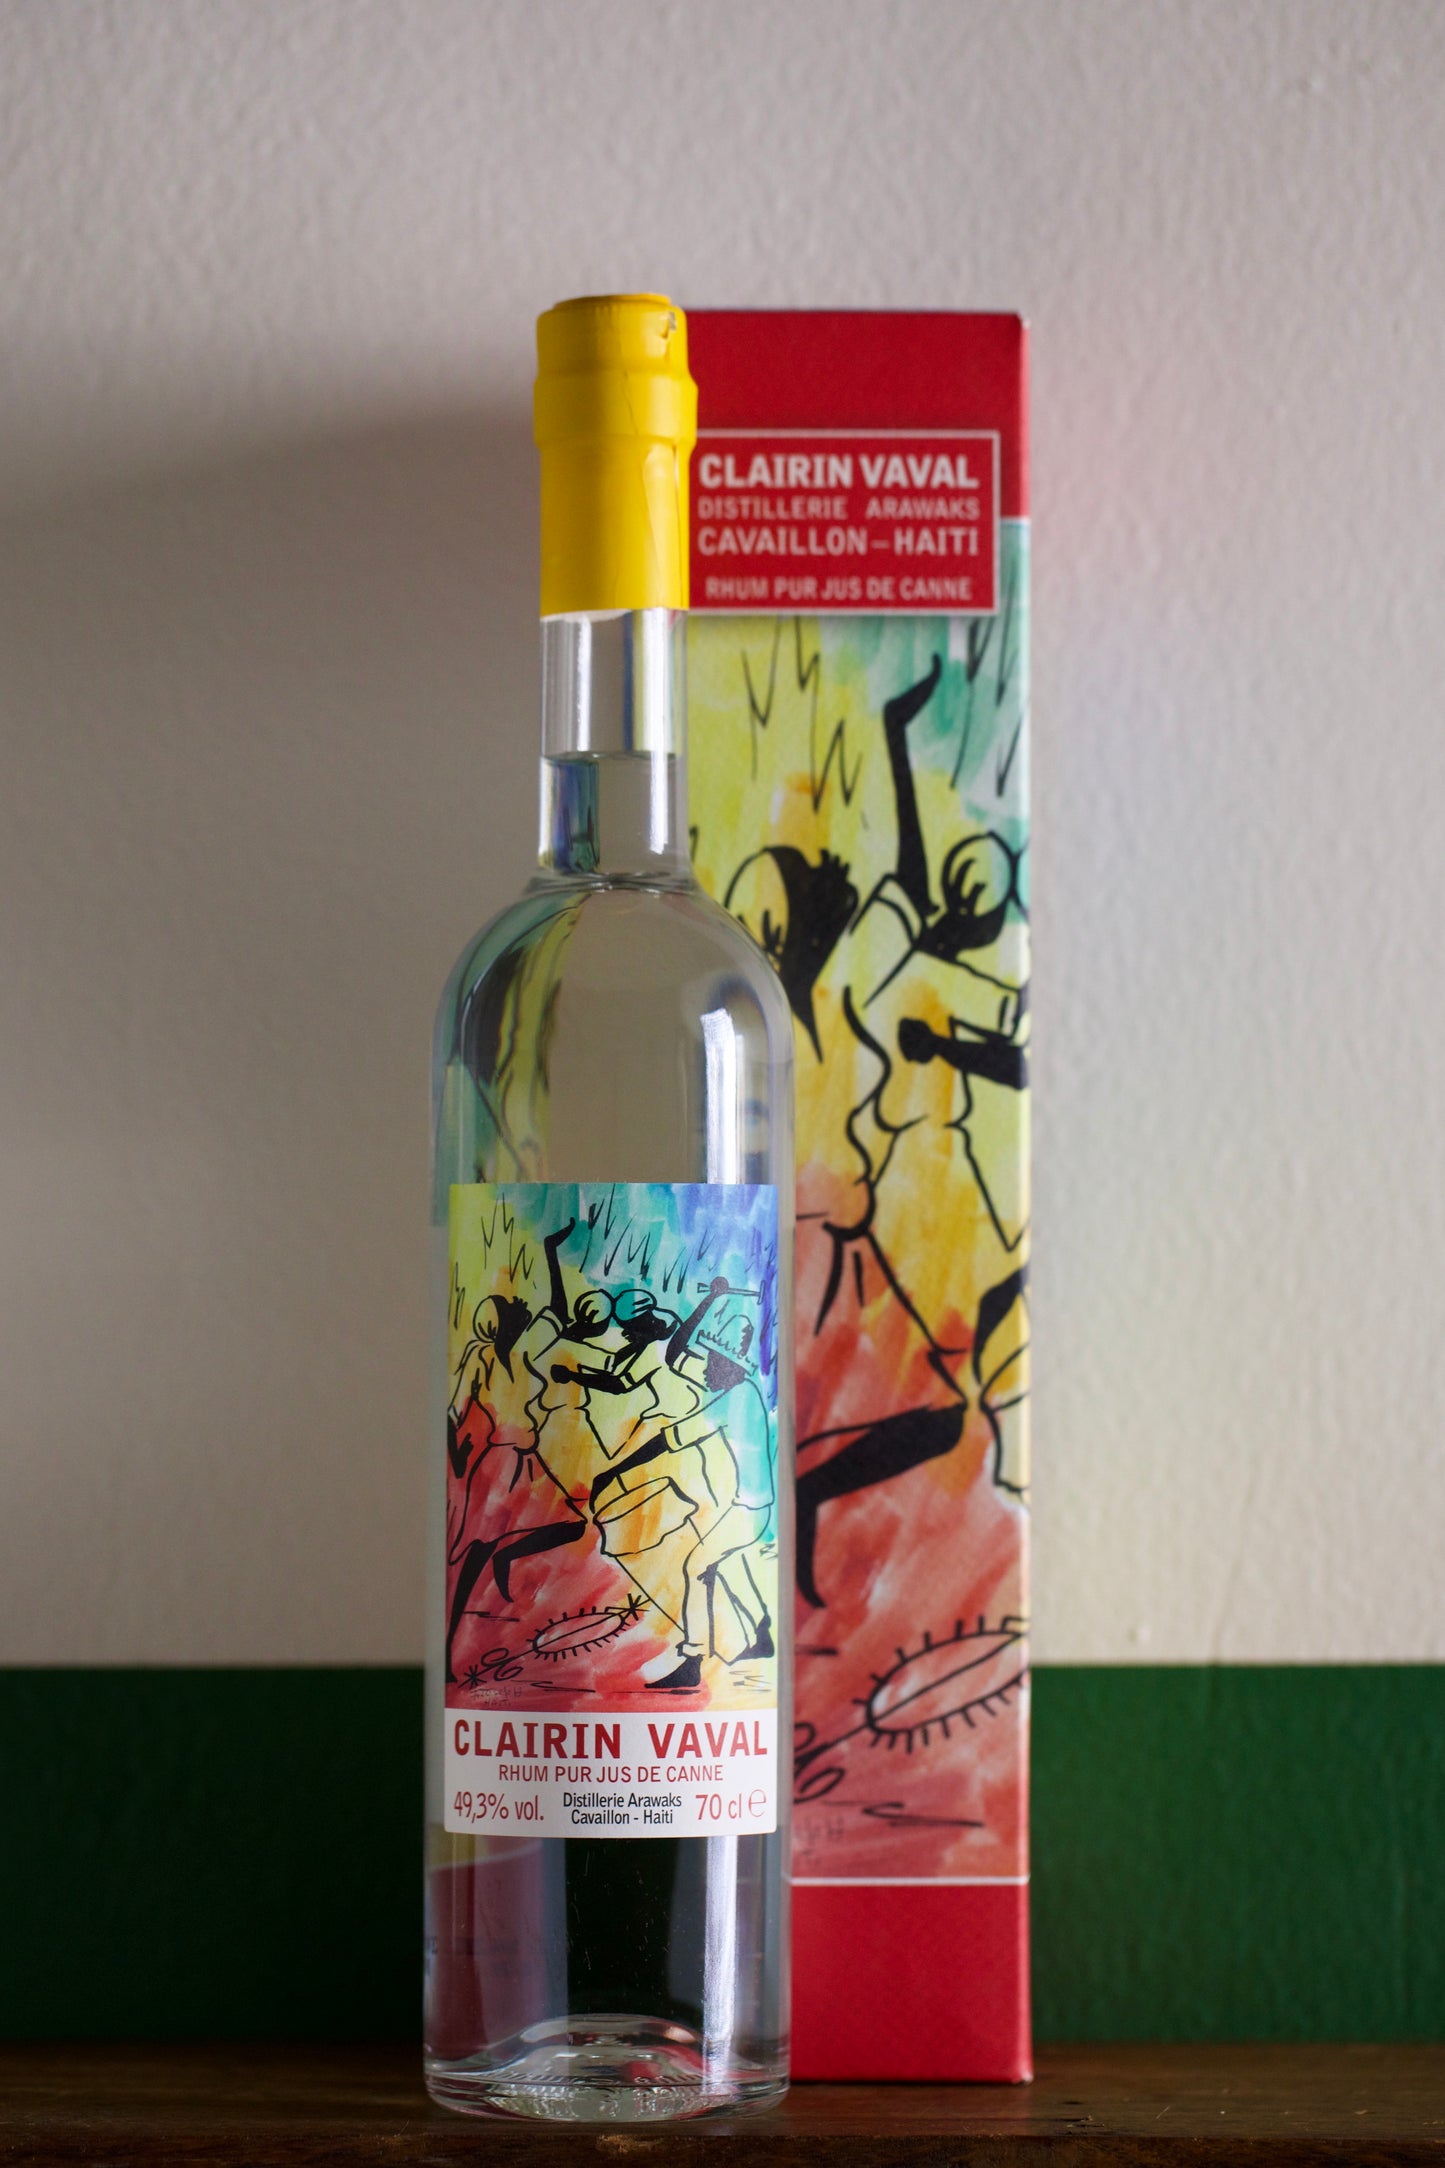 Bottle of Distillerie Arawaks 'Clairin Vaval' 700ml